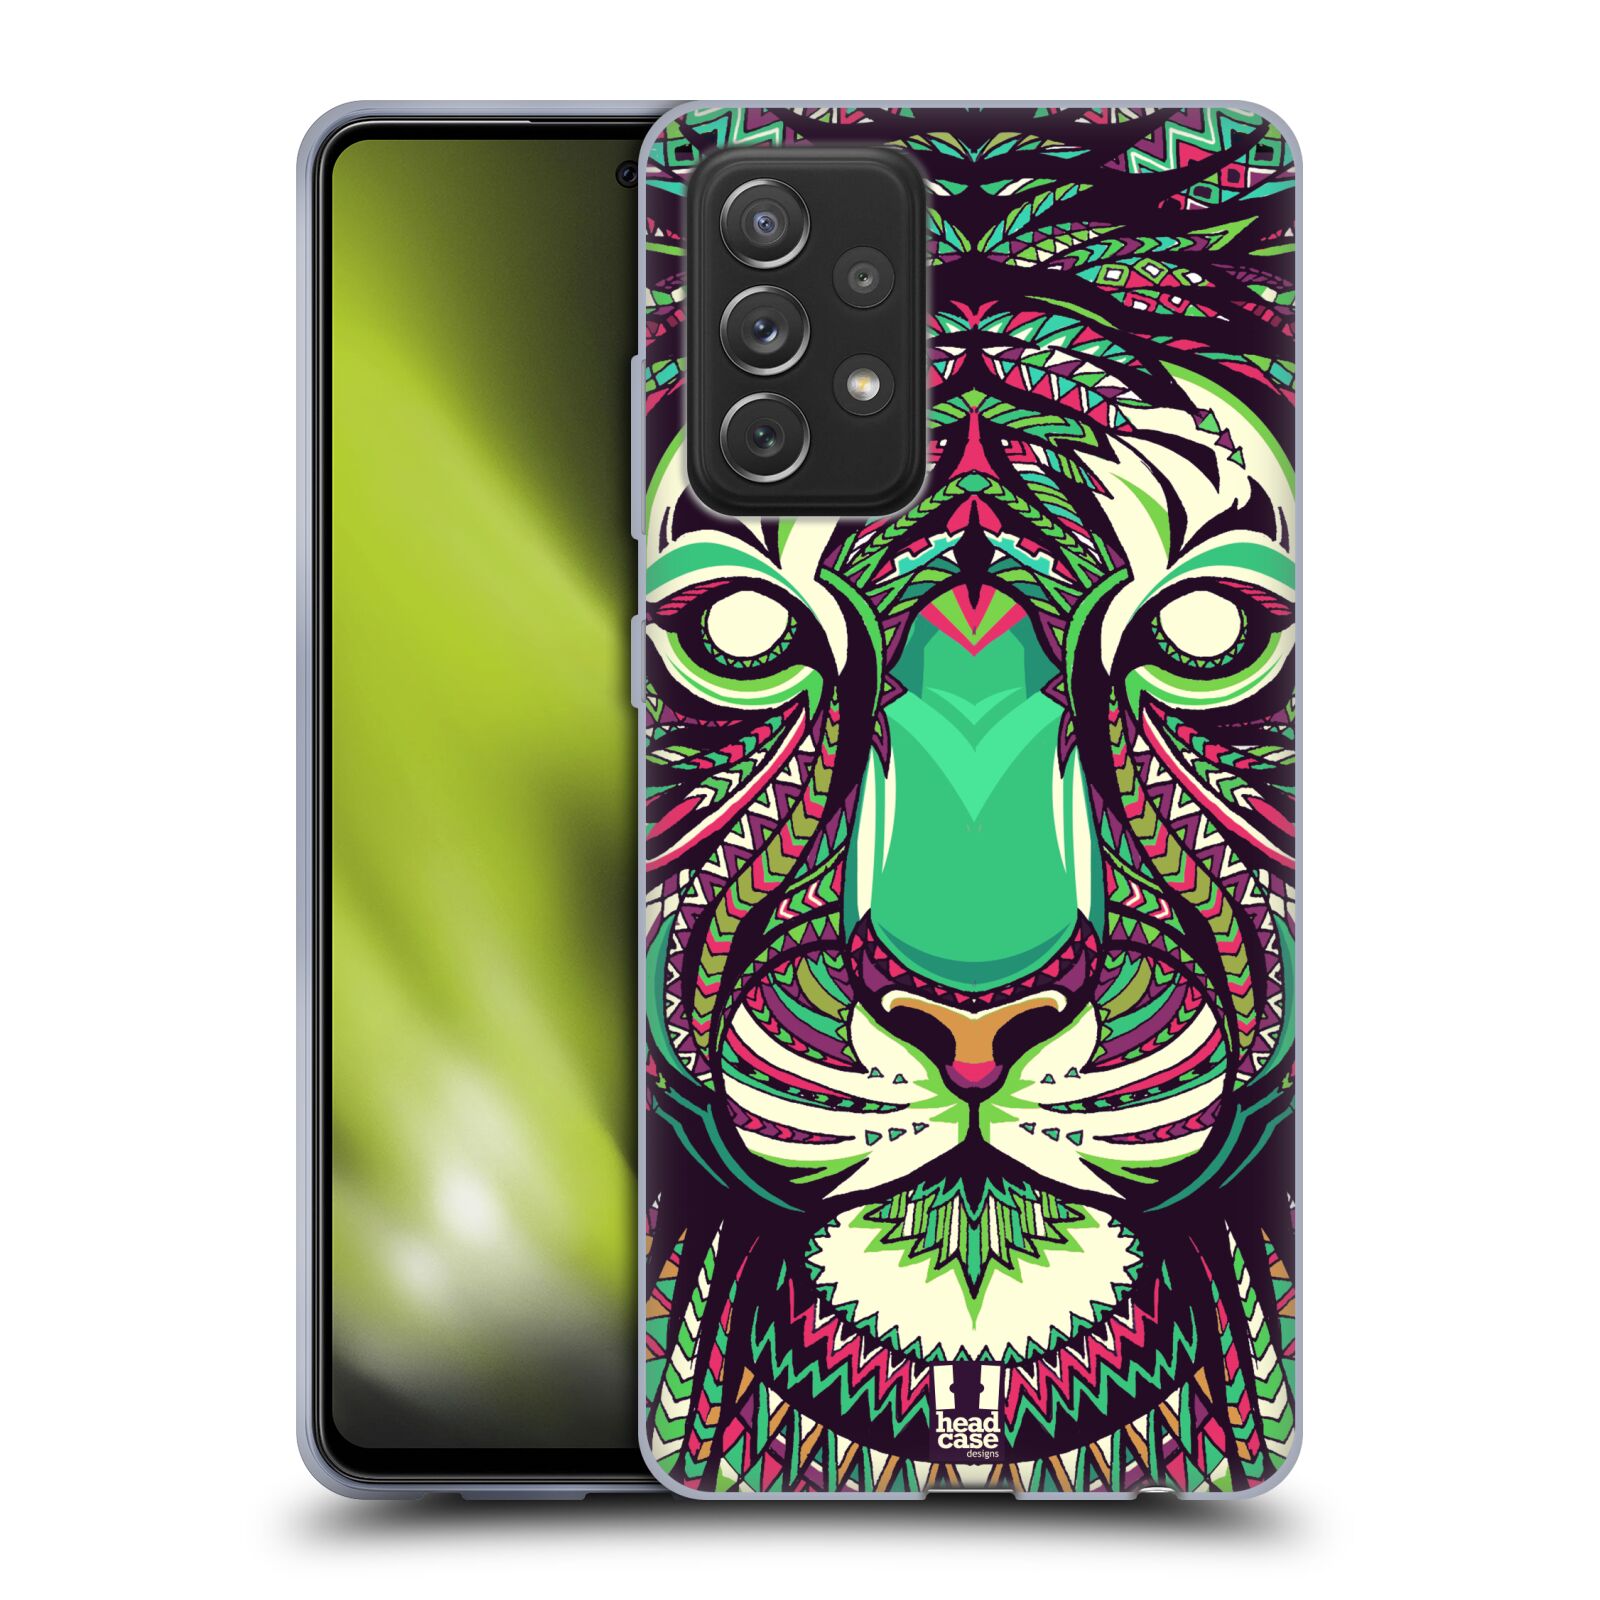 Plastový obal HEAD CASE na mobil Samsung Galaxy A72 / A72 5G vzor Aztécký motiv zvíře 2 tygr